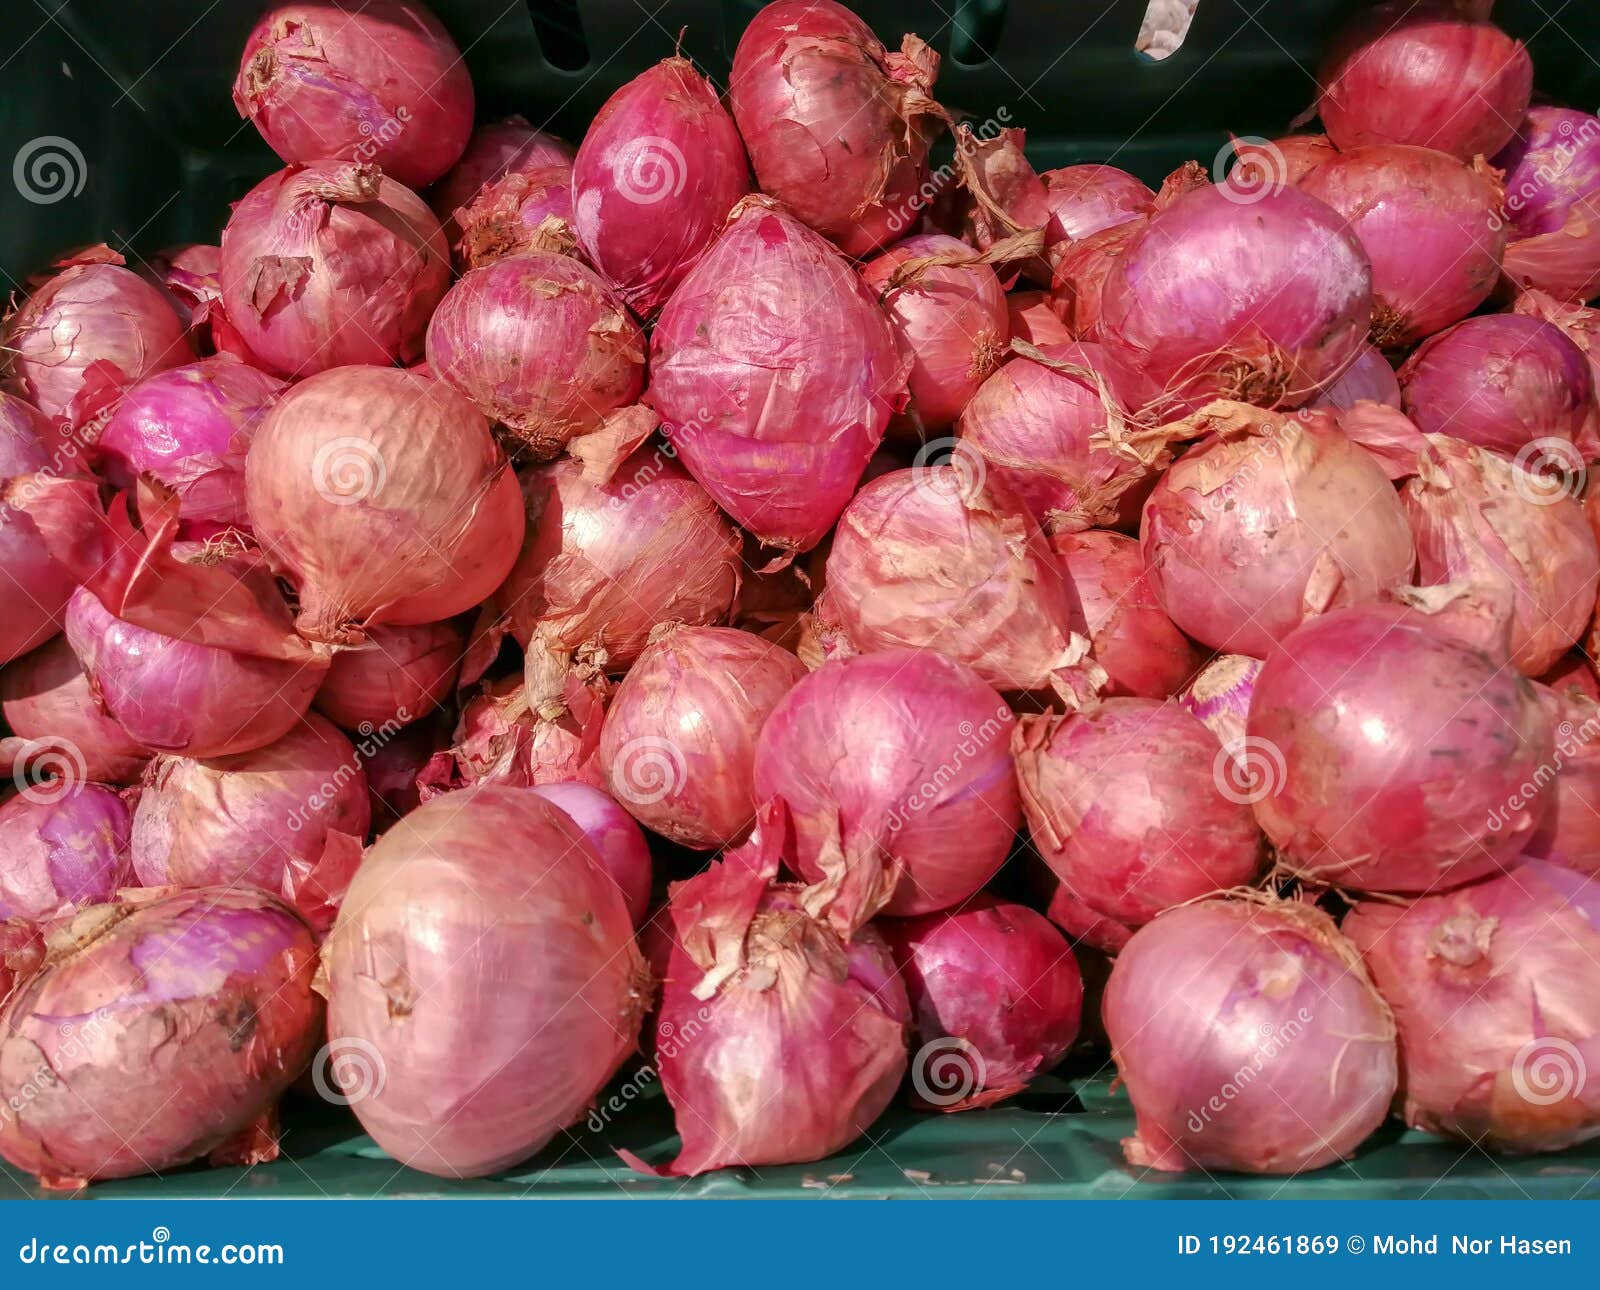 red onion or bawang merah.